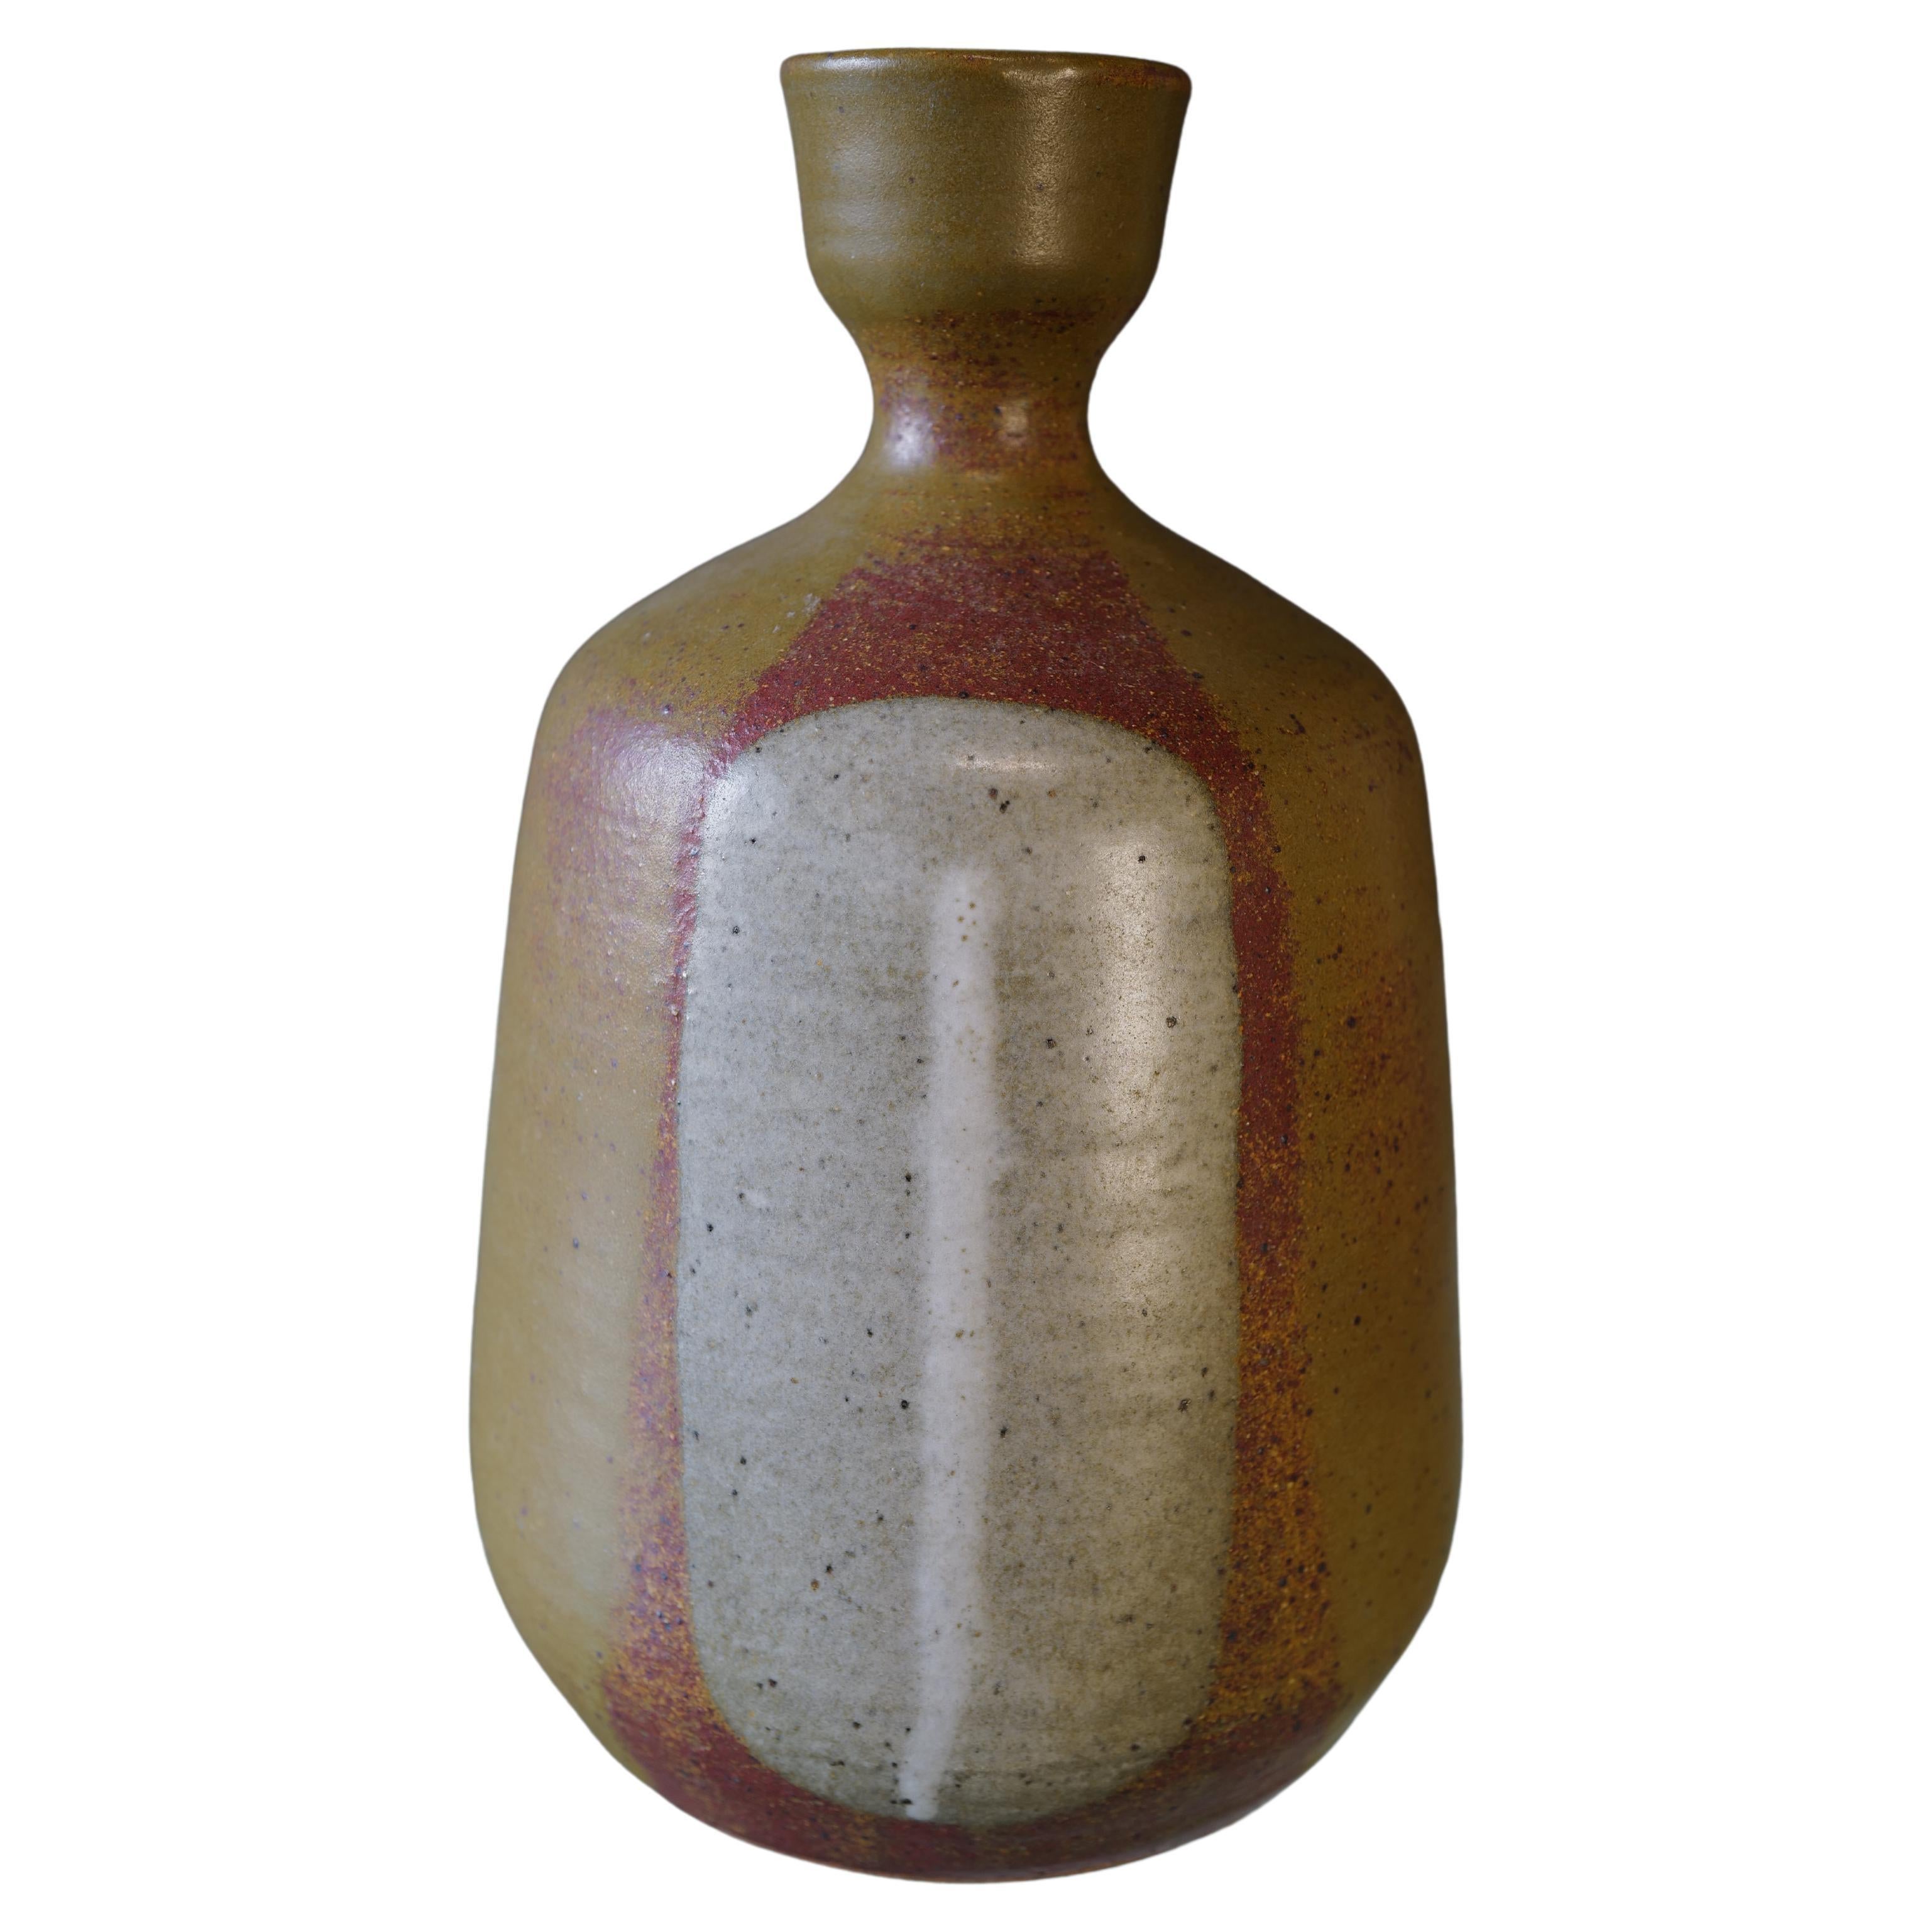 Japanese Ceramic Pottery Vase